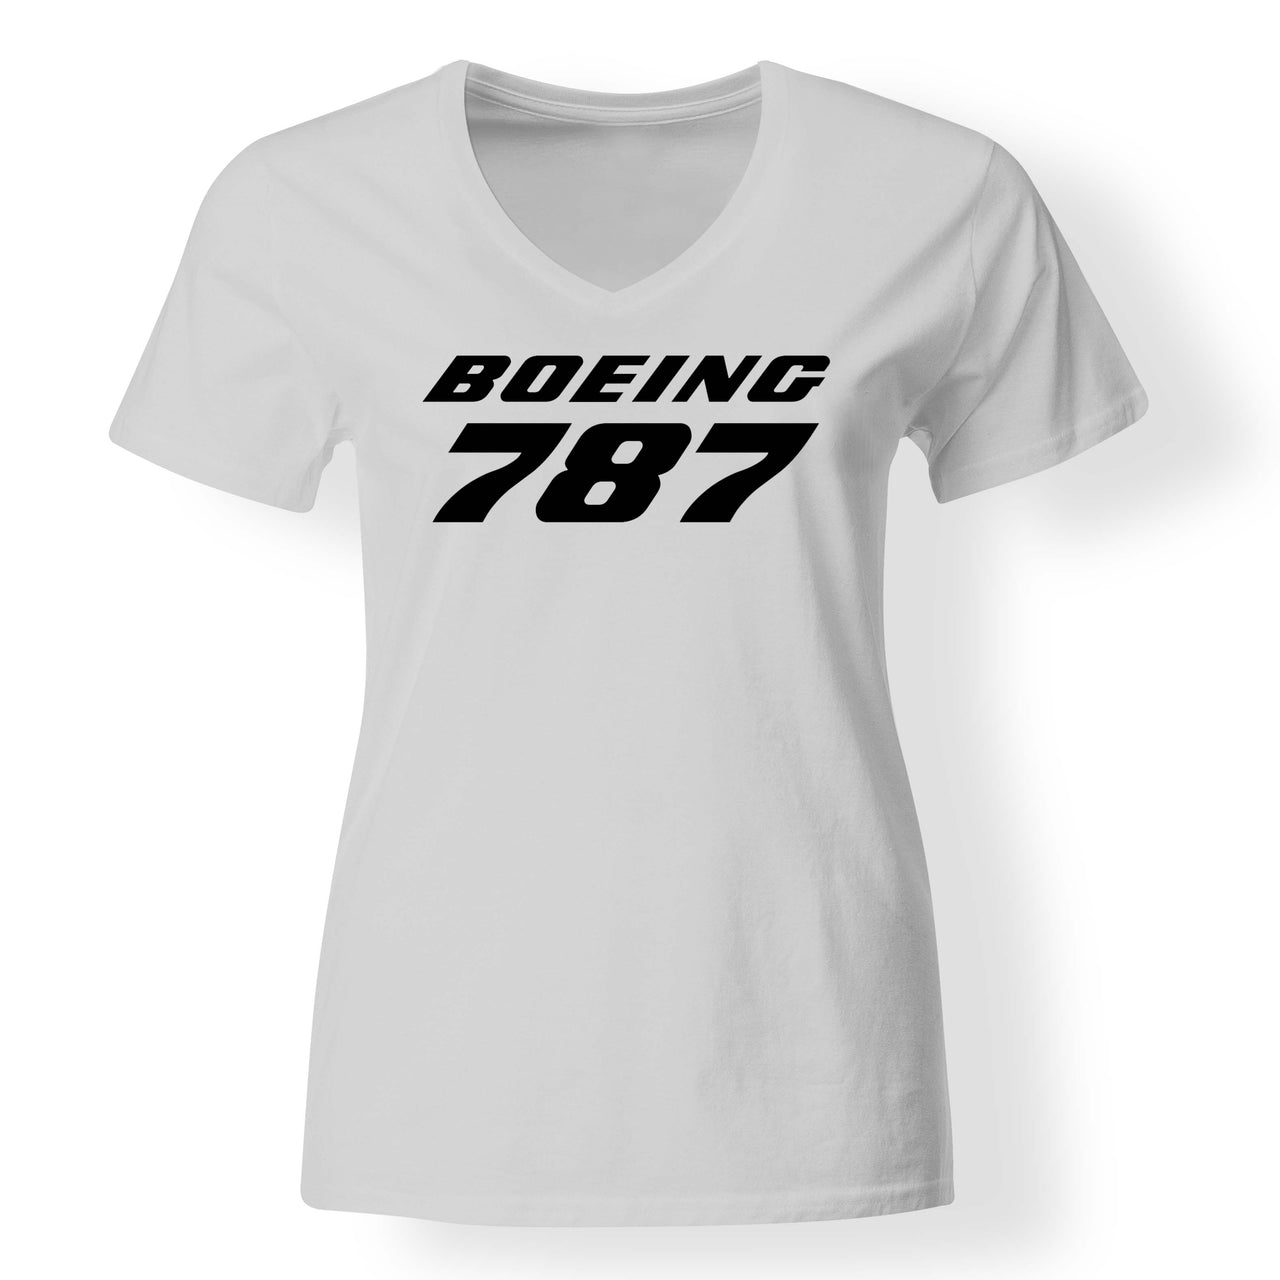 Boeing 787 & Text Designed V-Neck T-Shirts